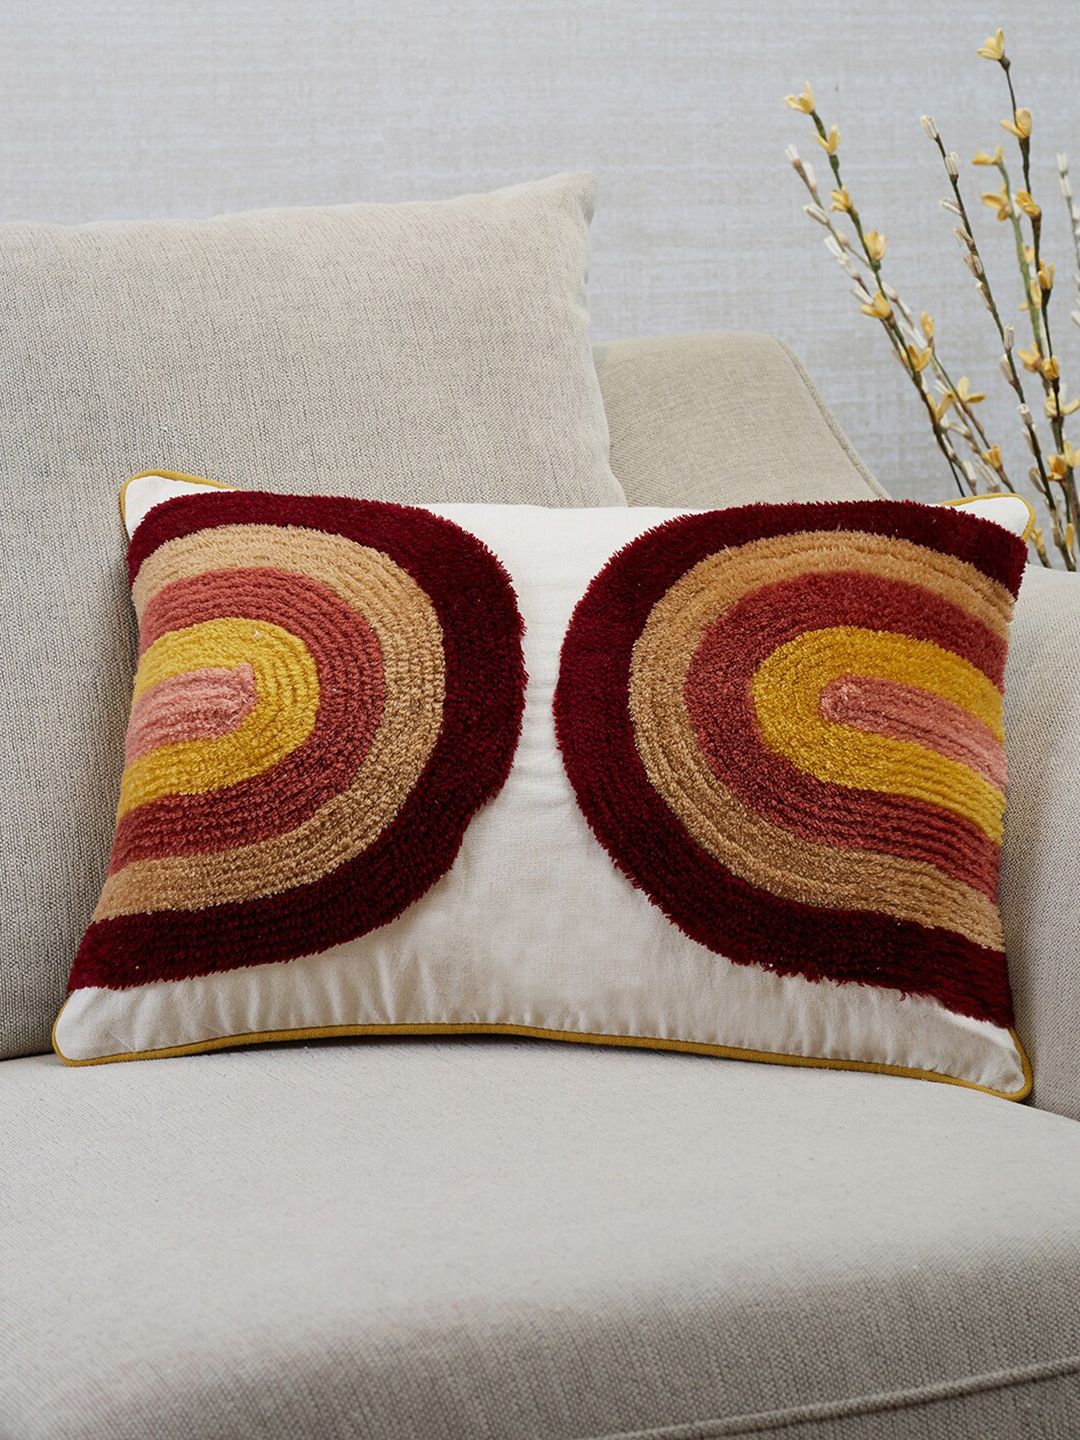 HomeTown Orange & Mustard Rectangle Cushion Covers Price in India